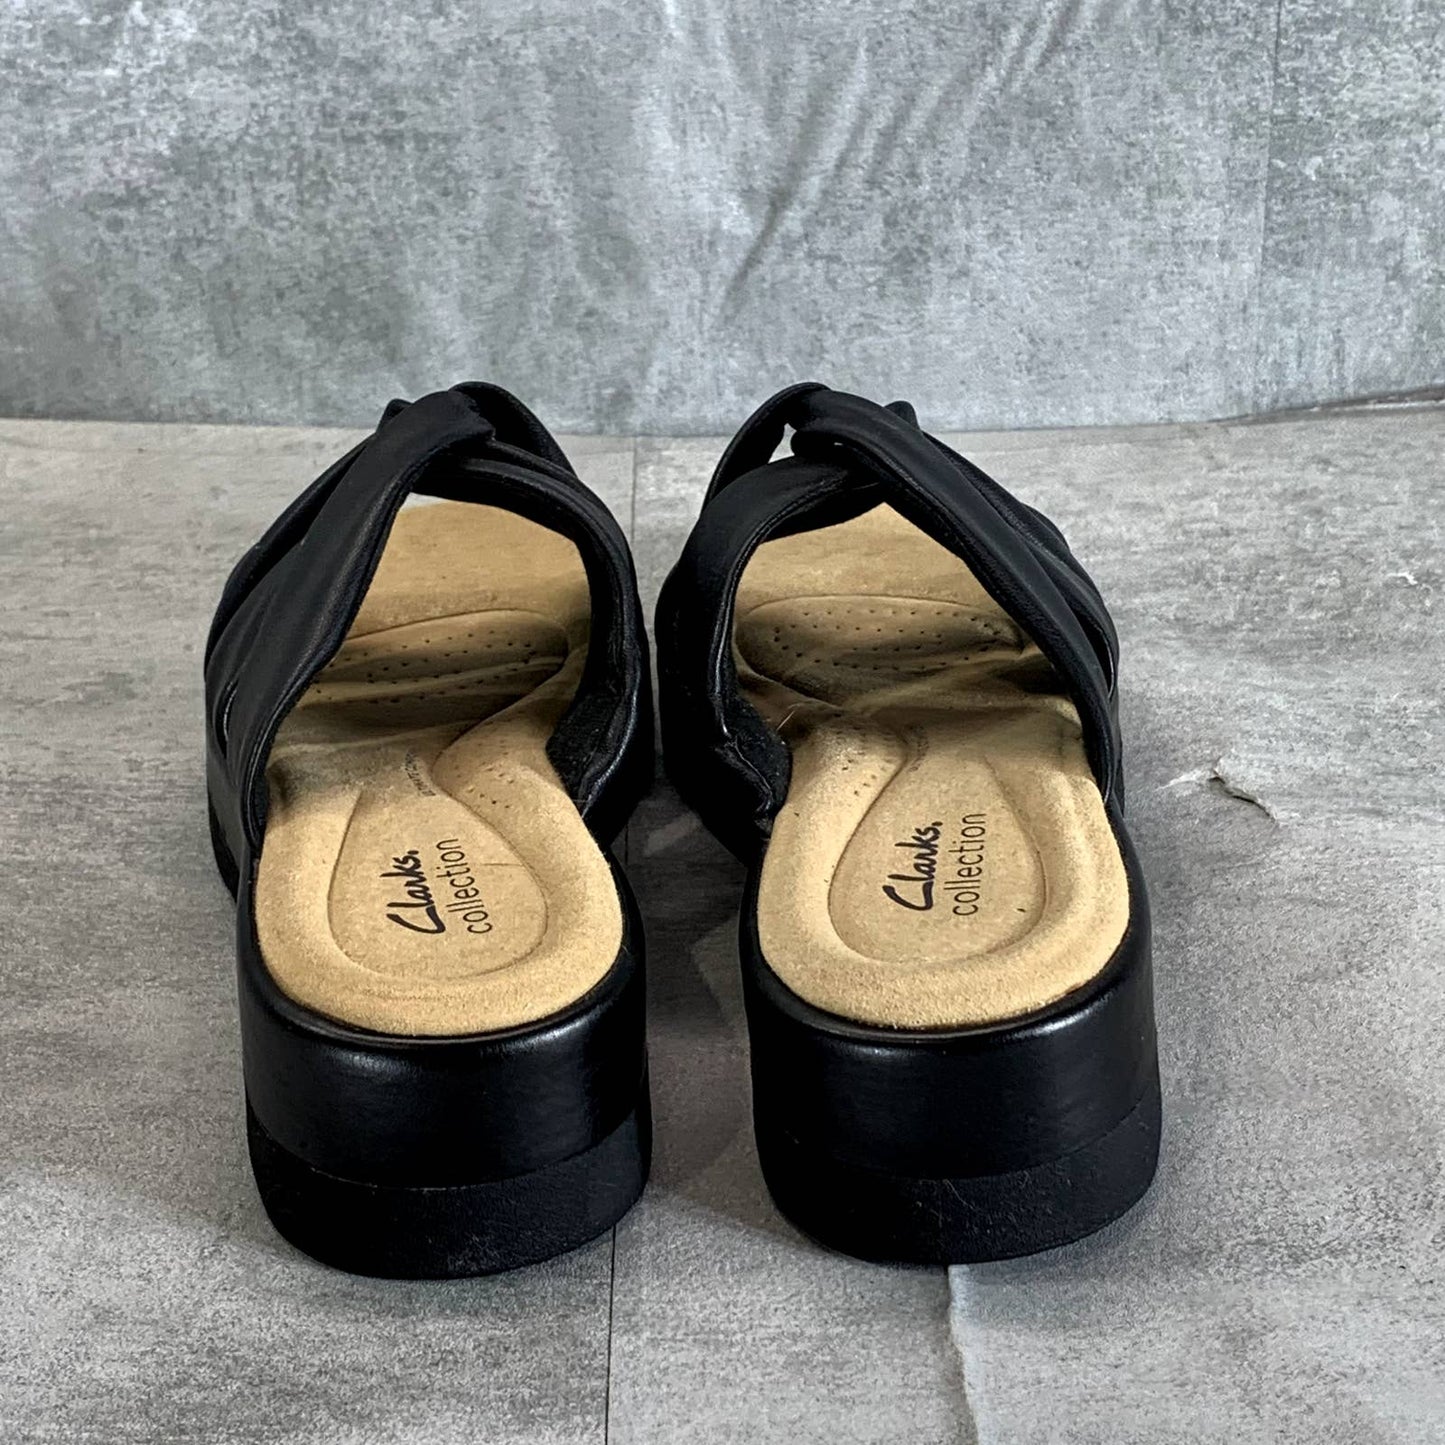 CLARKS COLLECTION Women's Black Clara Charm Slip-On Wedge Sandals SZ 9